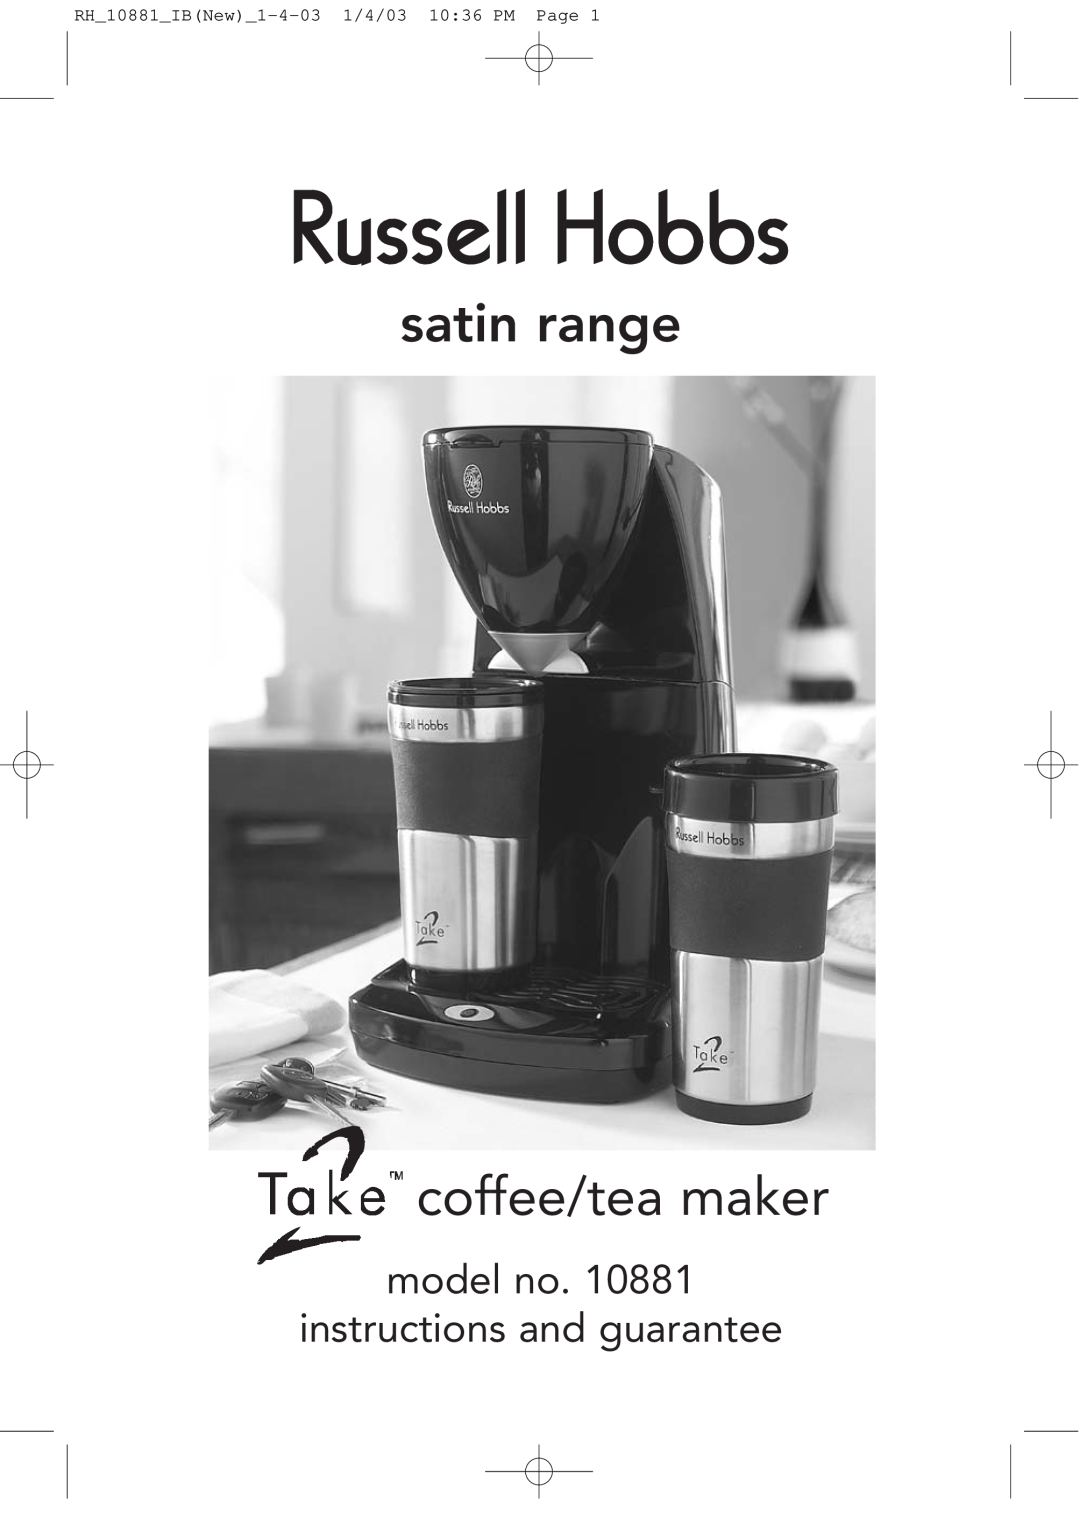 Russell Hobbs 10881 manual satin range coffee/tea maker, model no instructions and guarantee 